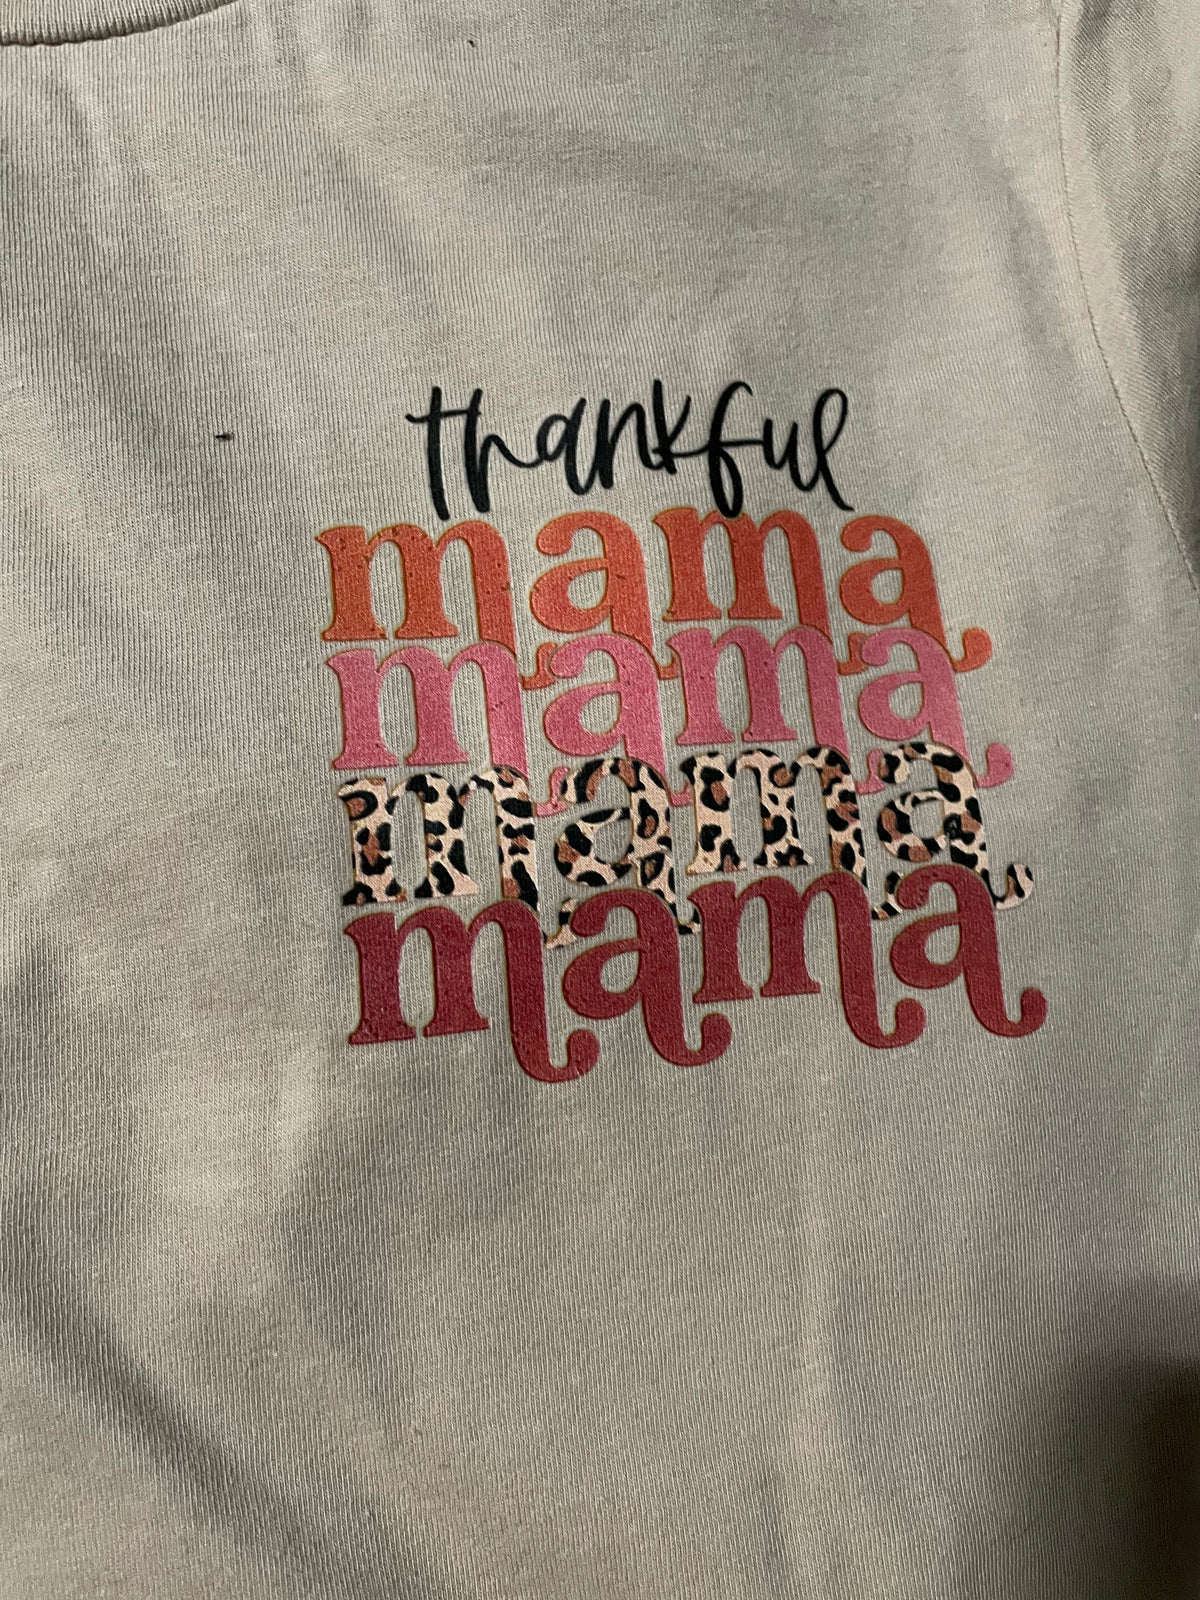 Thankful Mama Graphic Tee